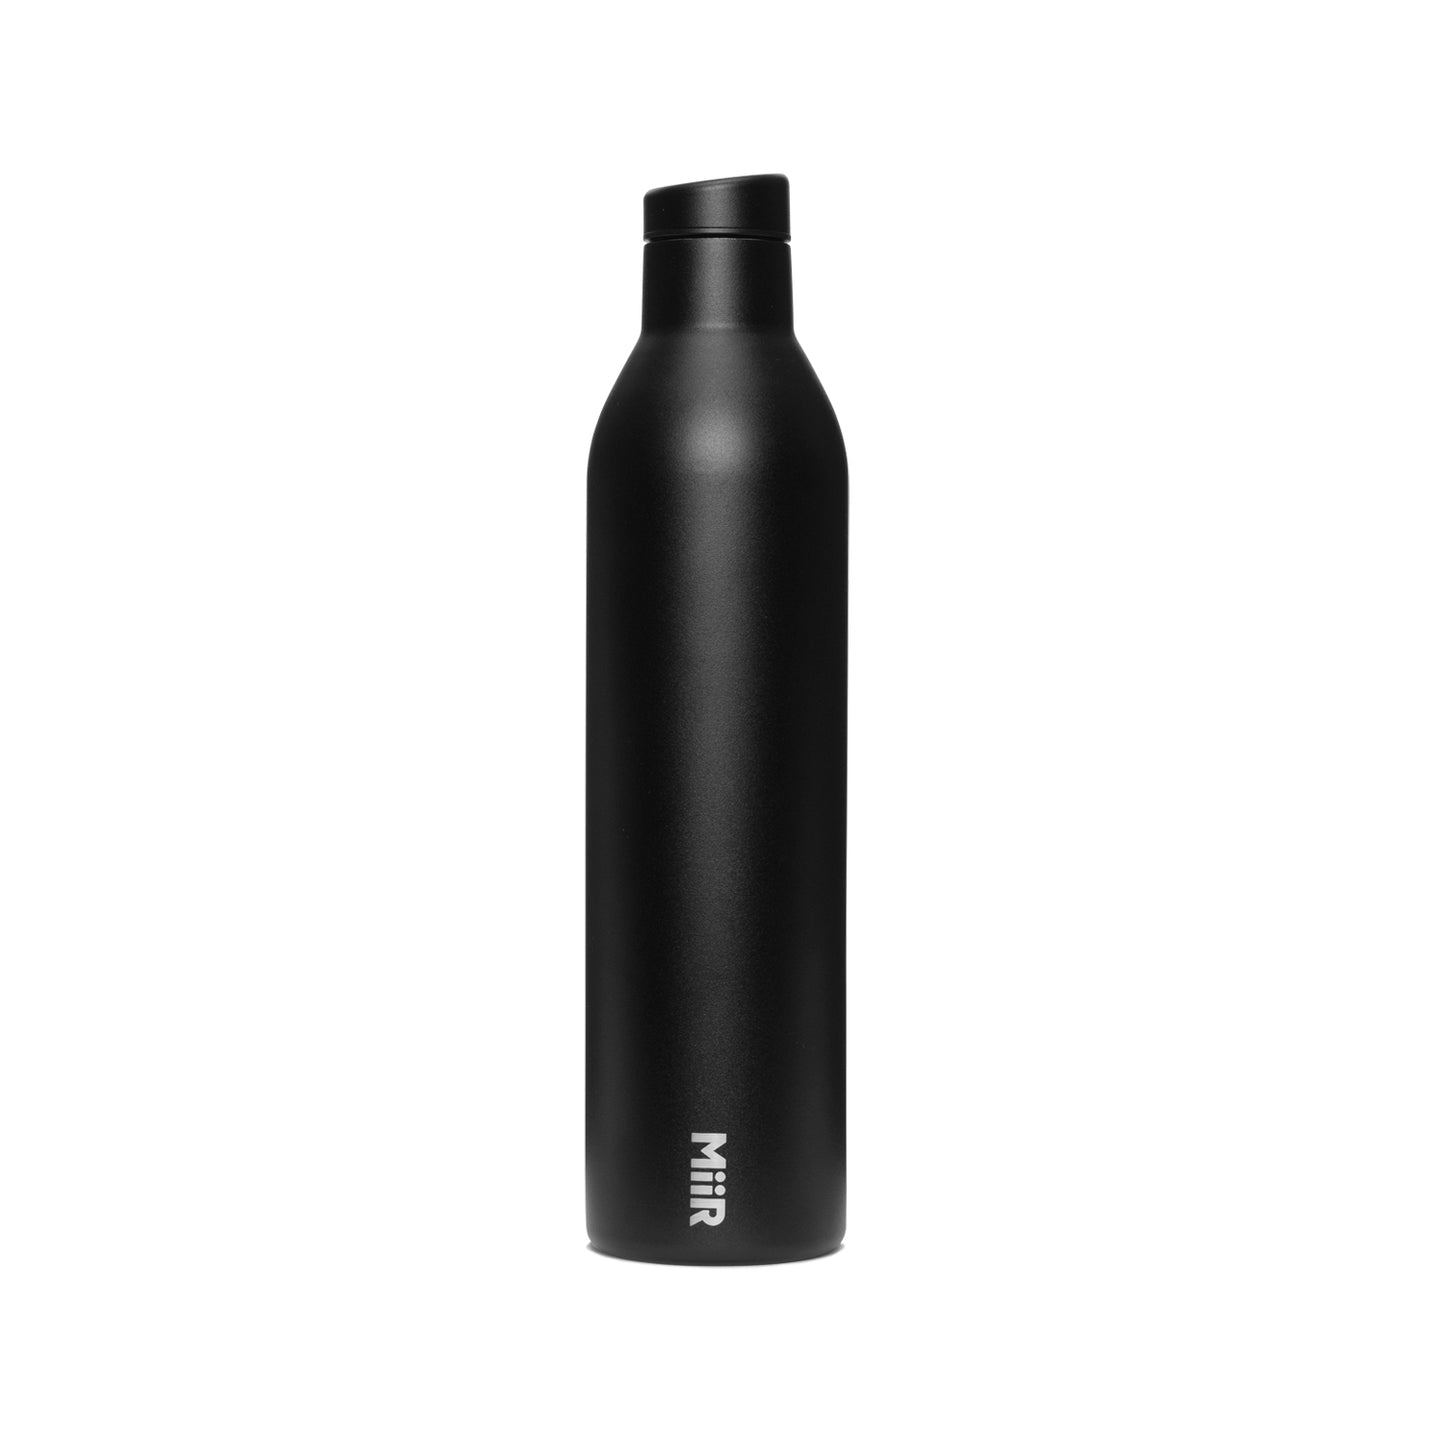 MIIR Water Bottle - Design wins. 